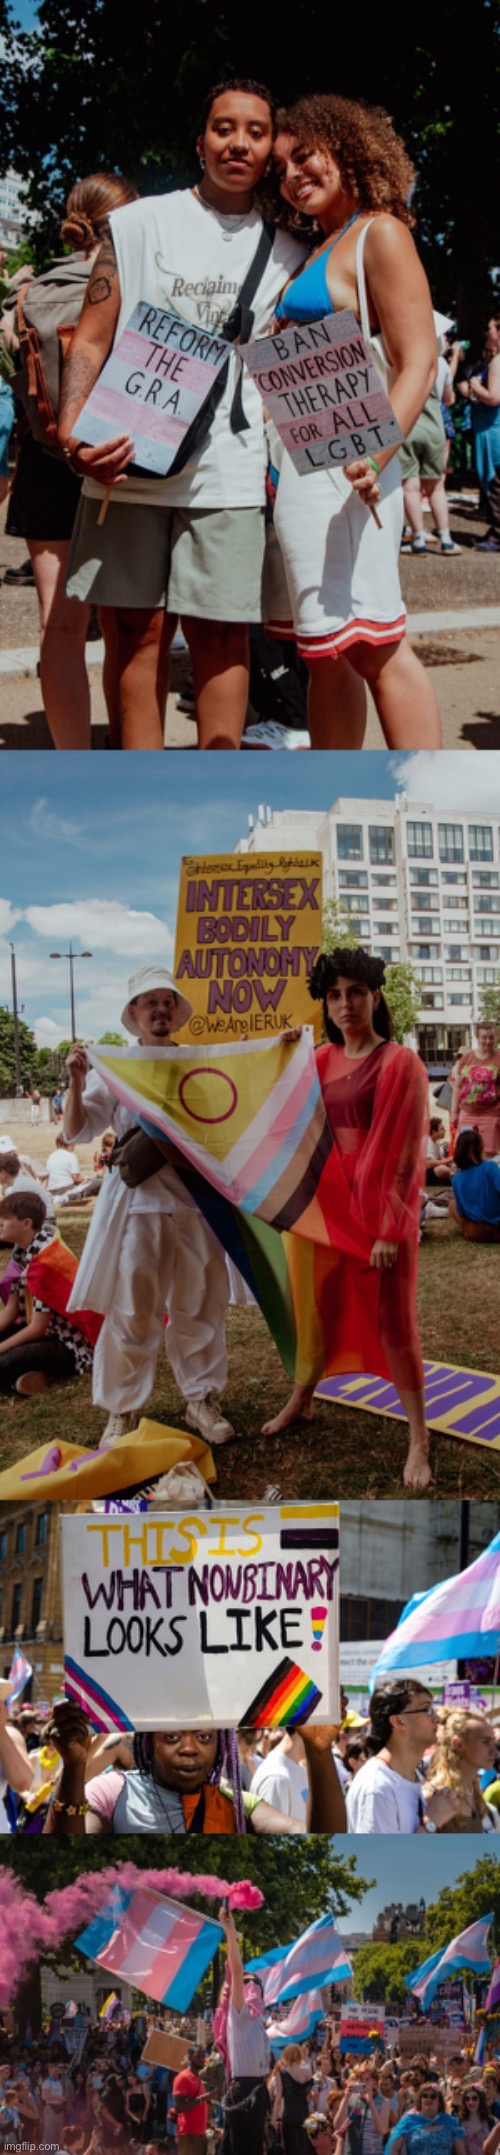 trans pride parade in london last july! | made w/ Imgflip meme maker